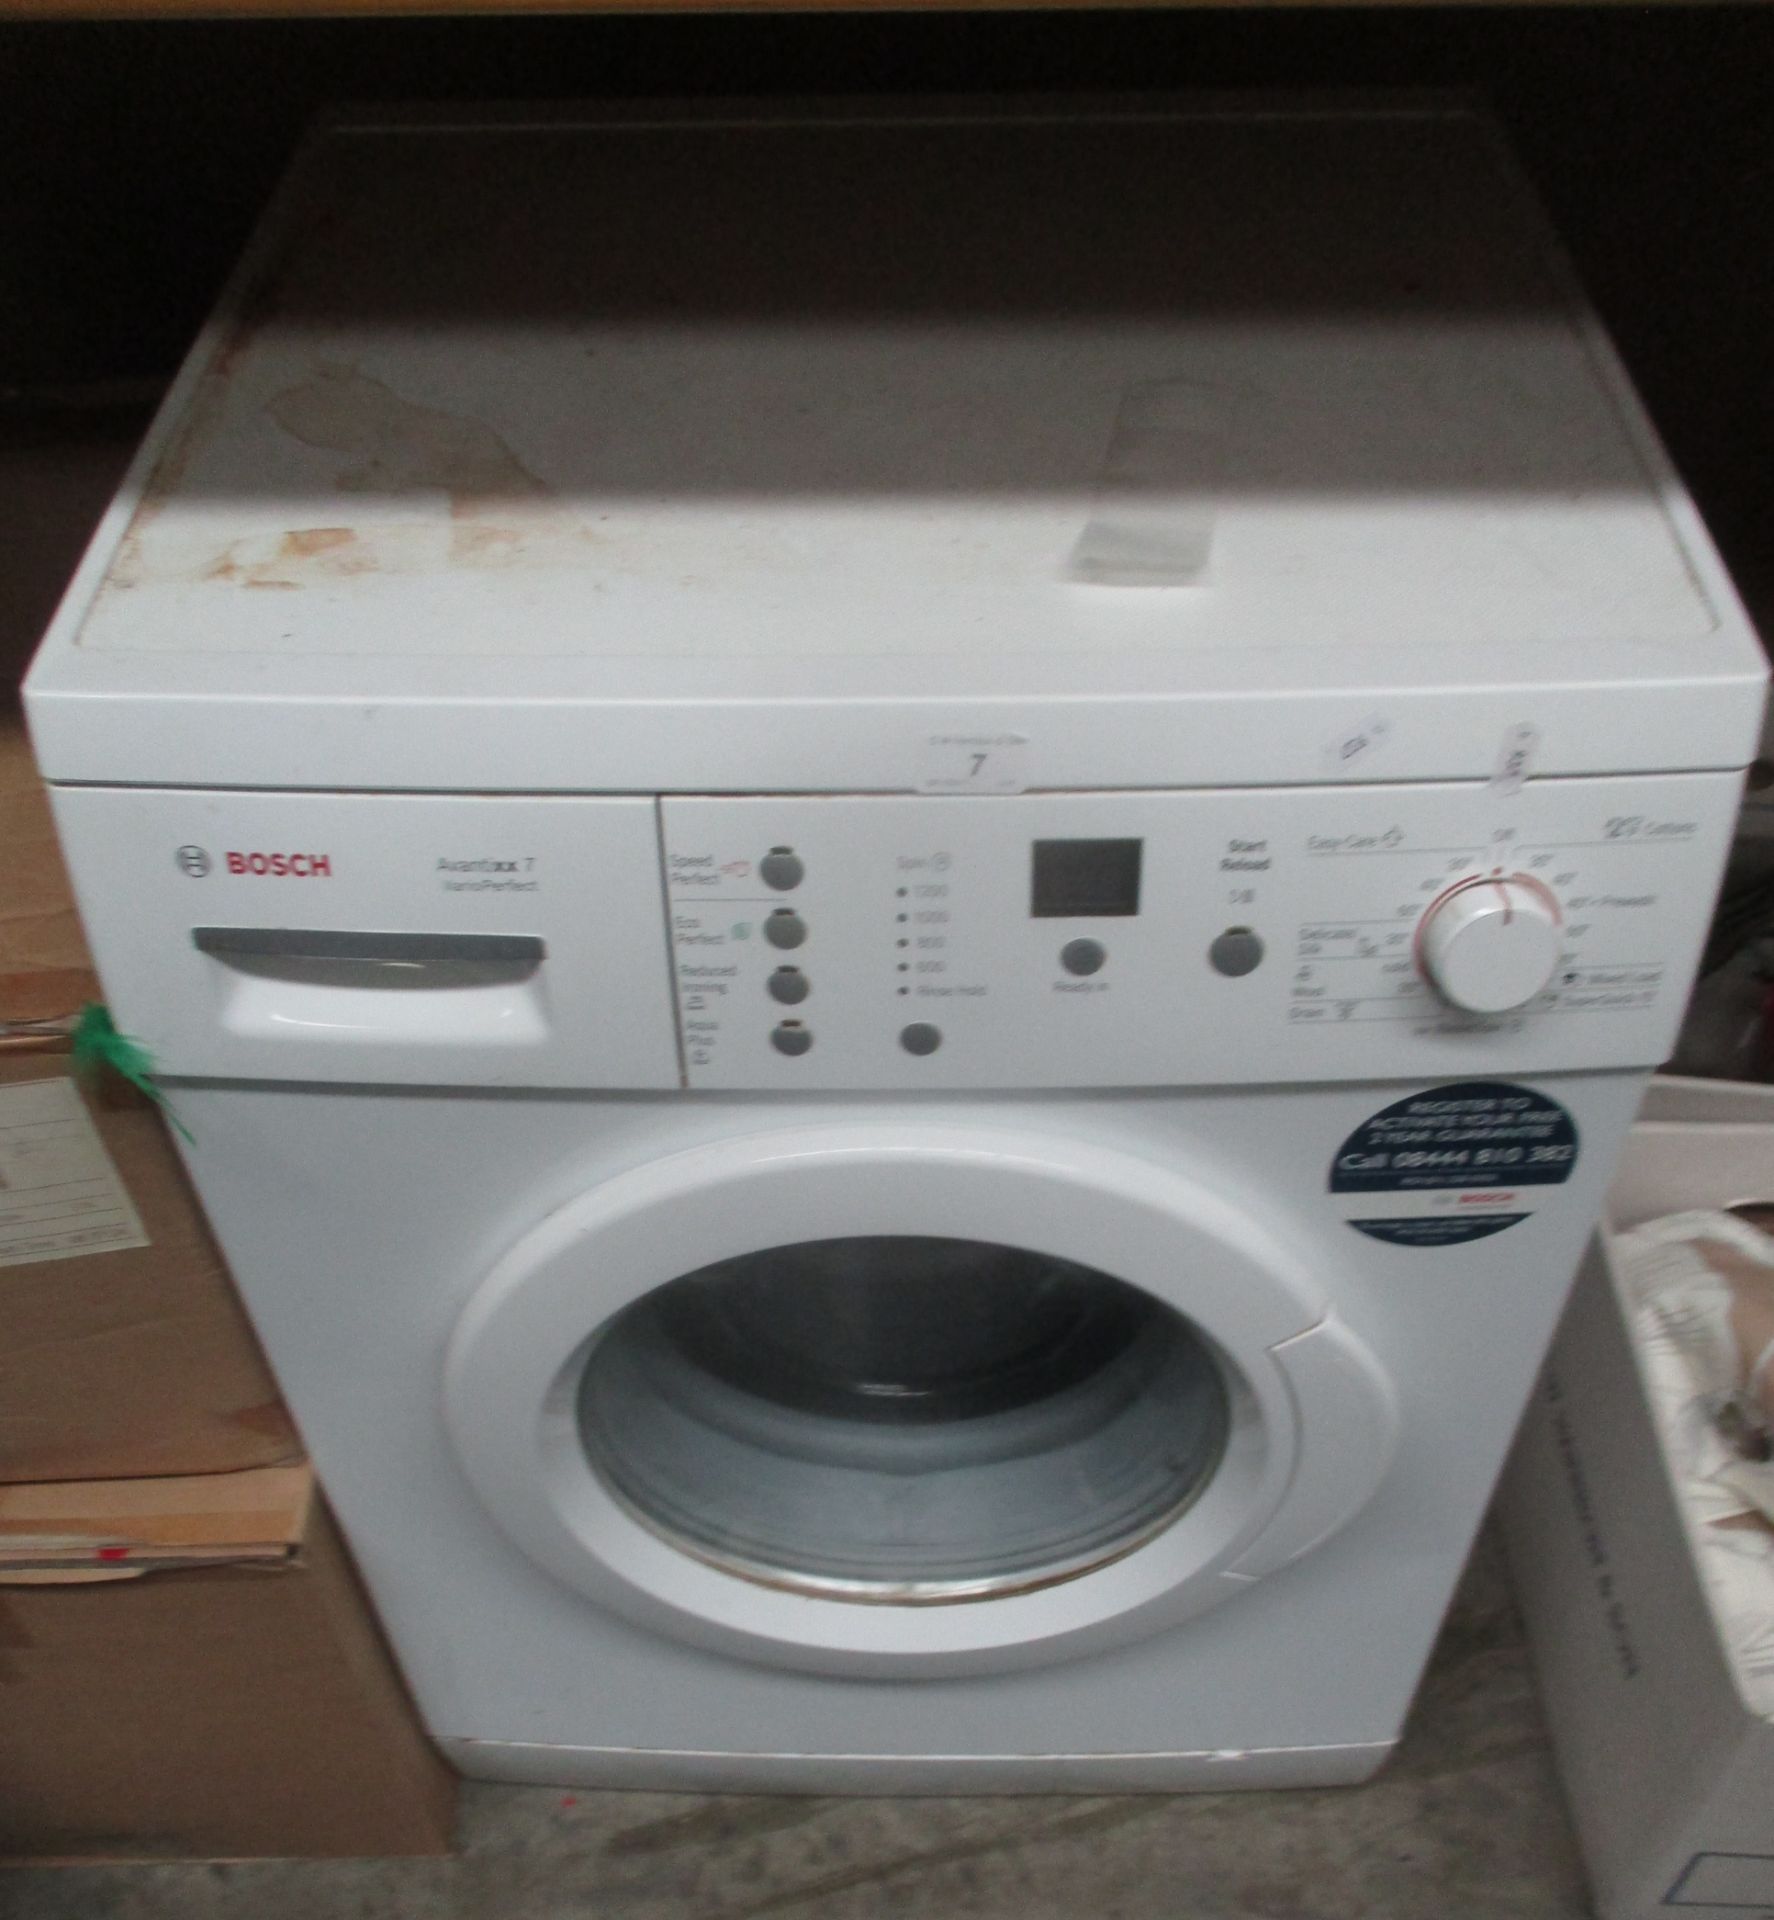 A Bosch AvantiXX 7 vario perfect washing machine